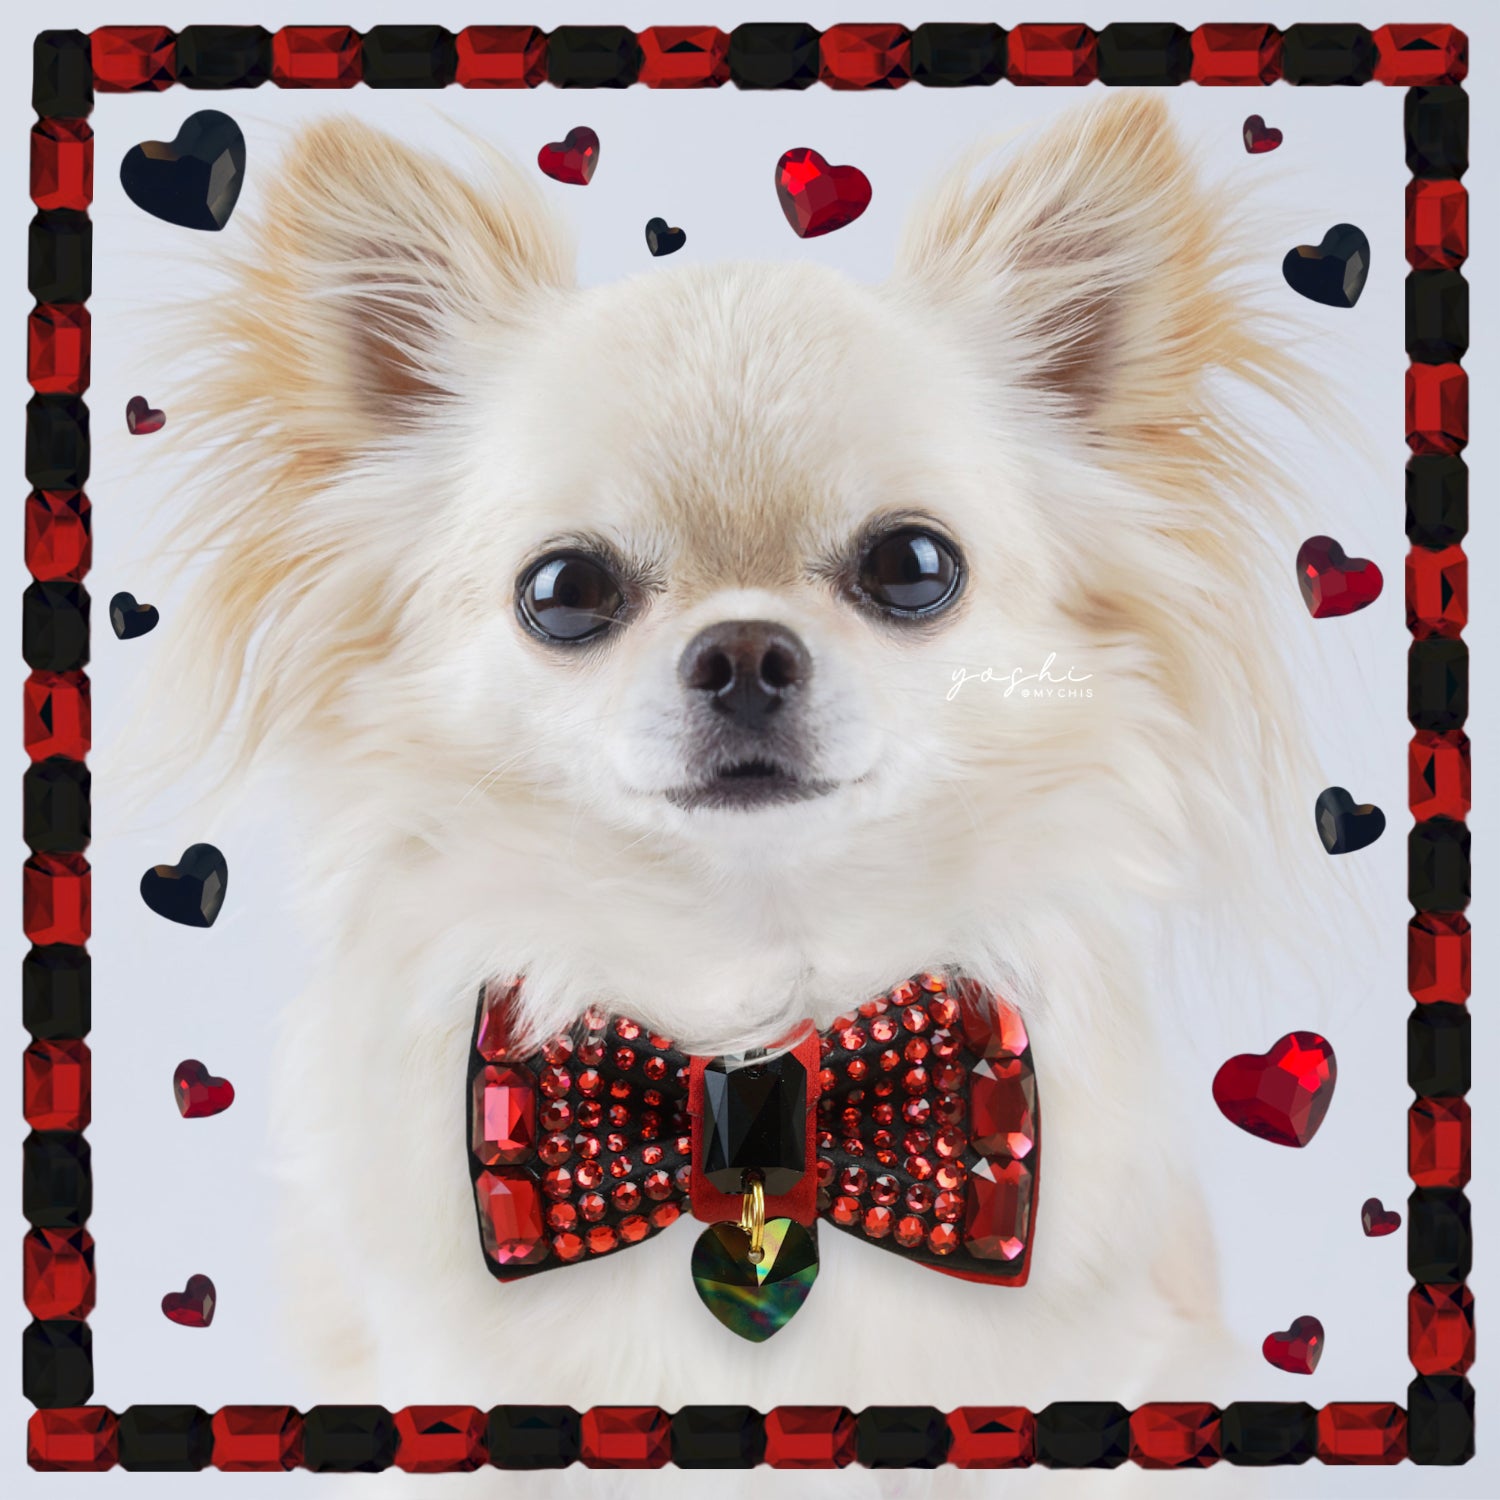 VIP Monarch “Lovebug” dog bow tie in black